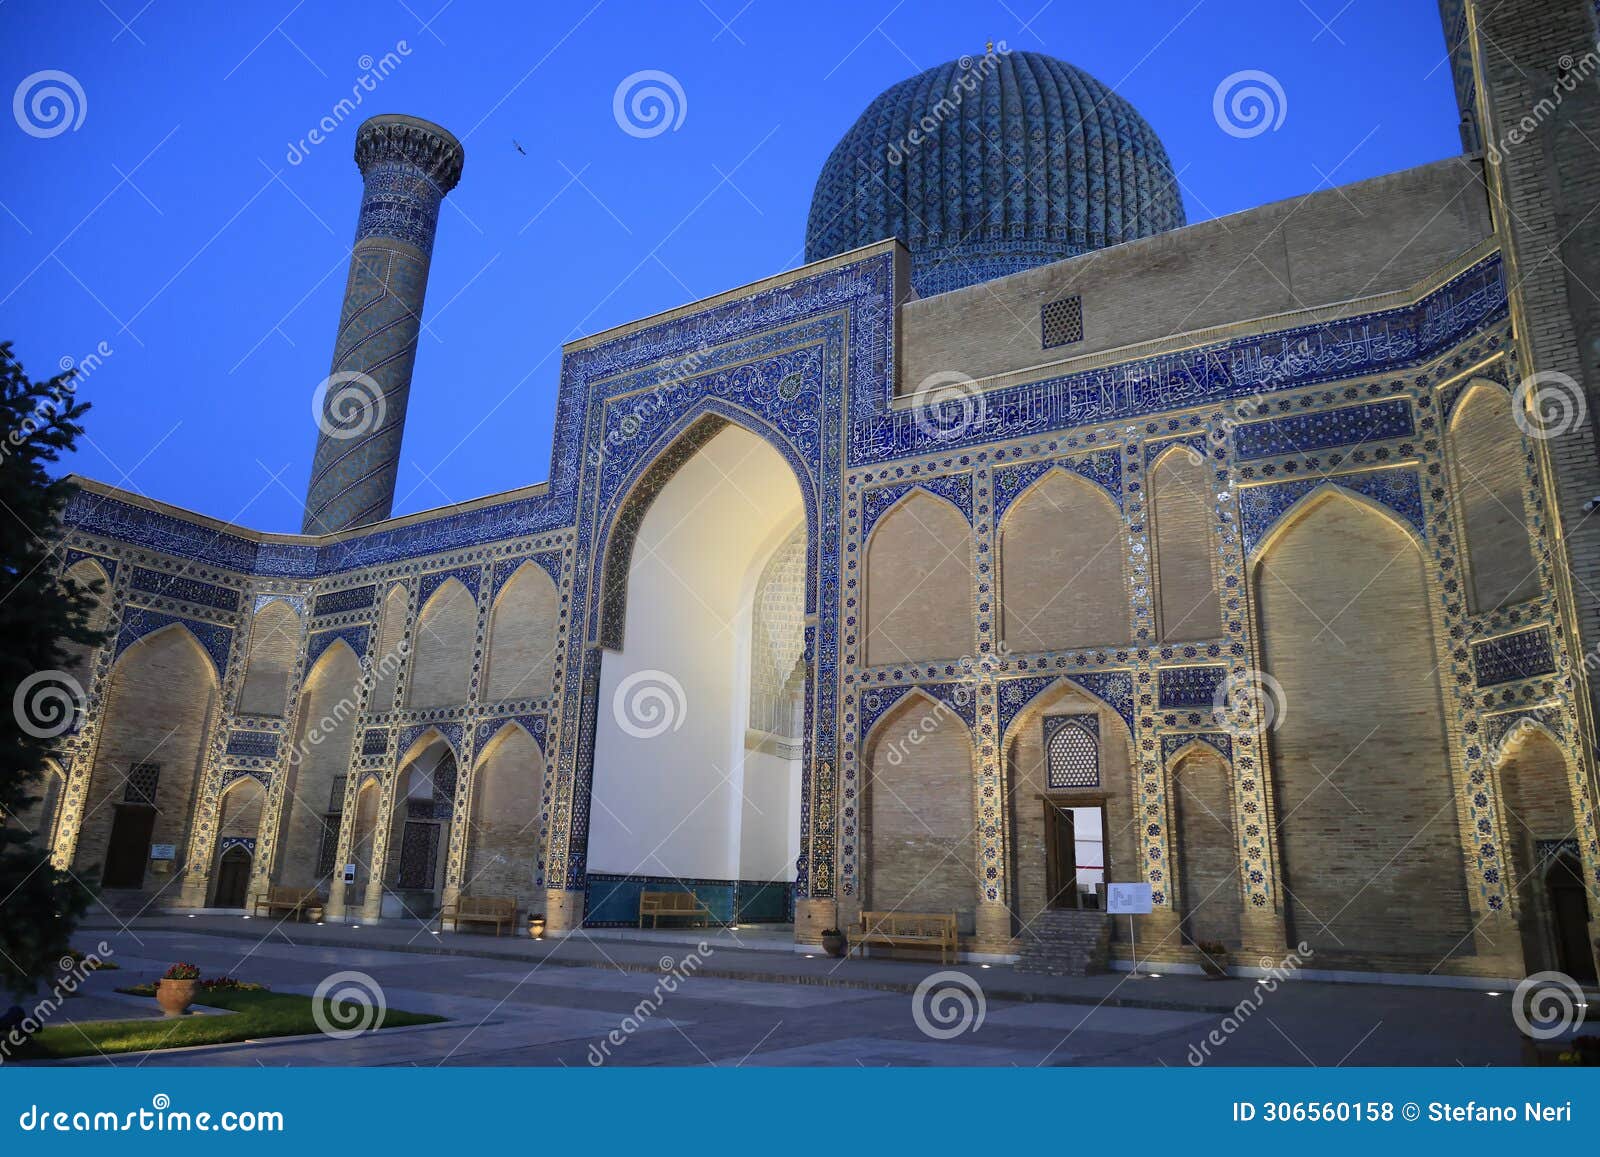 il mausoleo di tamerlano alla sera, samarcanda, uzbekistan